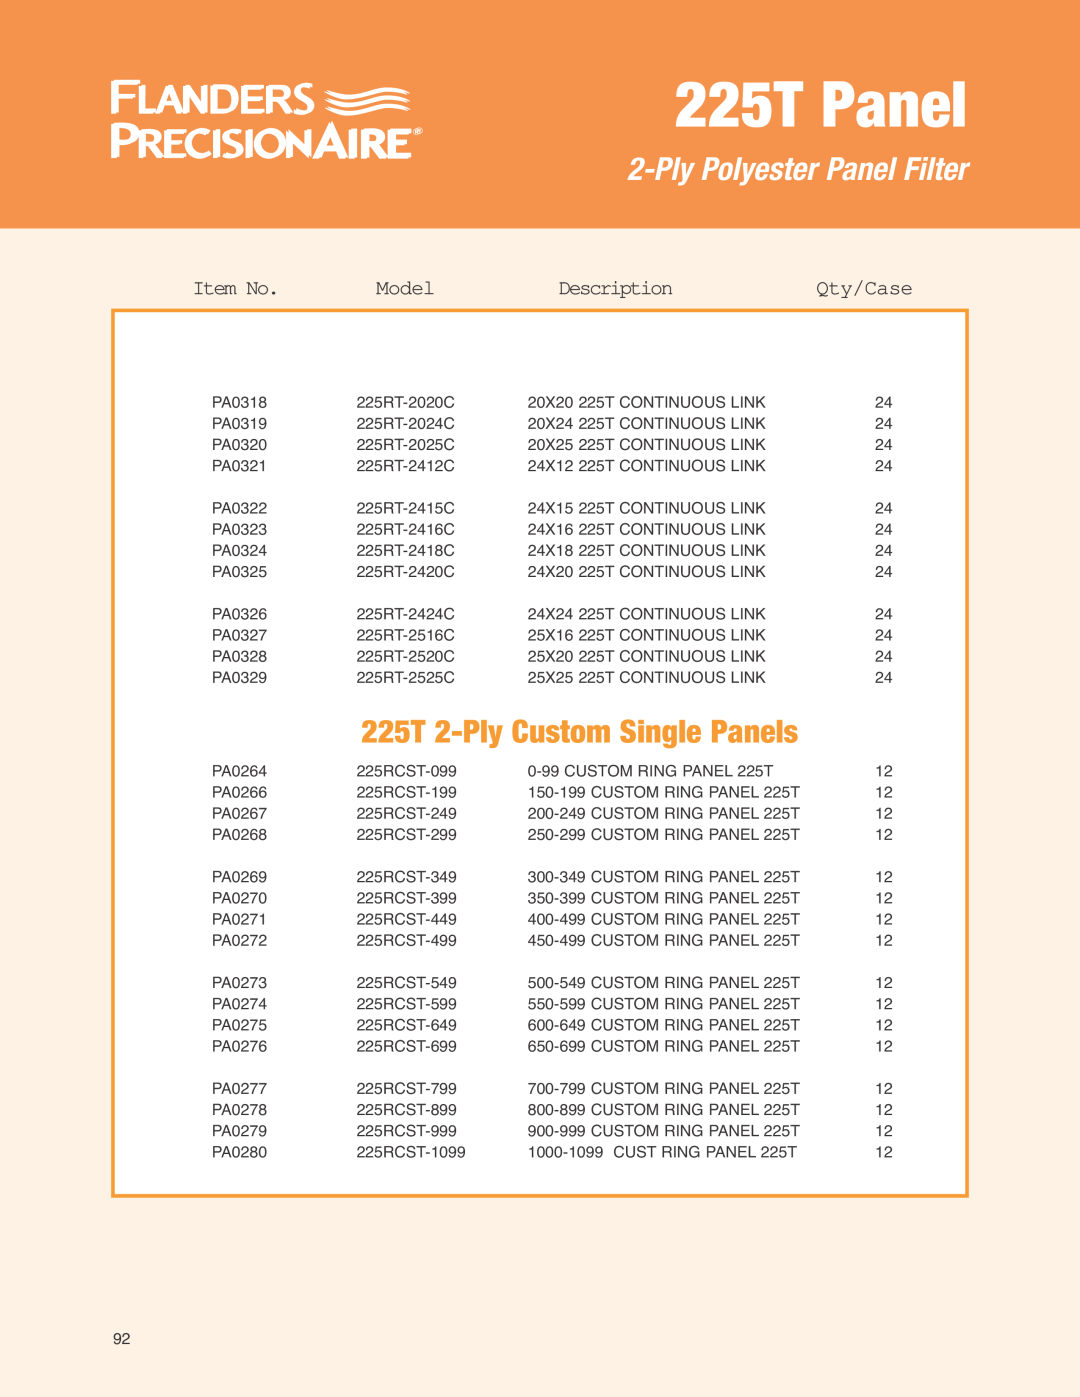 Precisionaire 225T Panels 225T 2-PlyCustom Single Panels, Item No, Model, Description, Qty/Case, PlyPolyester Panel Filter 